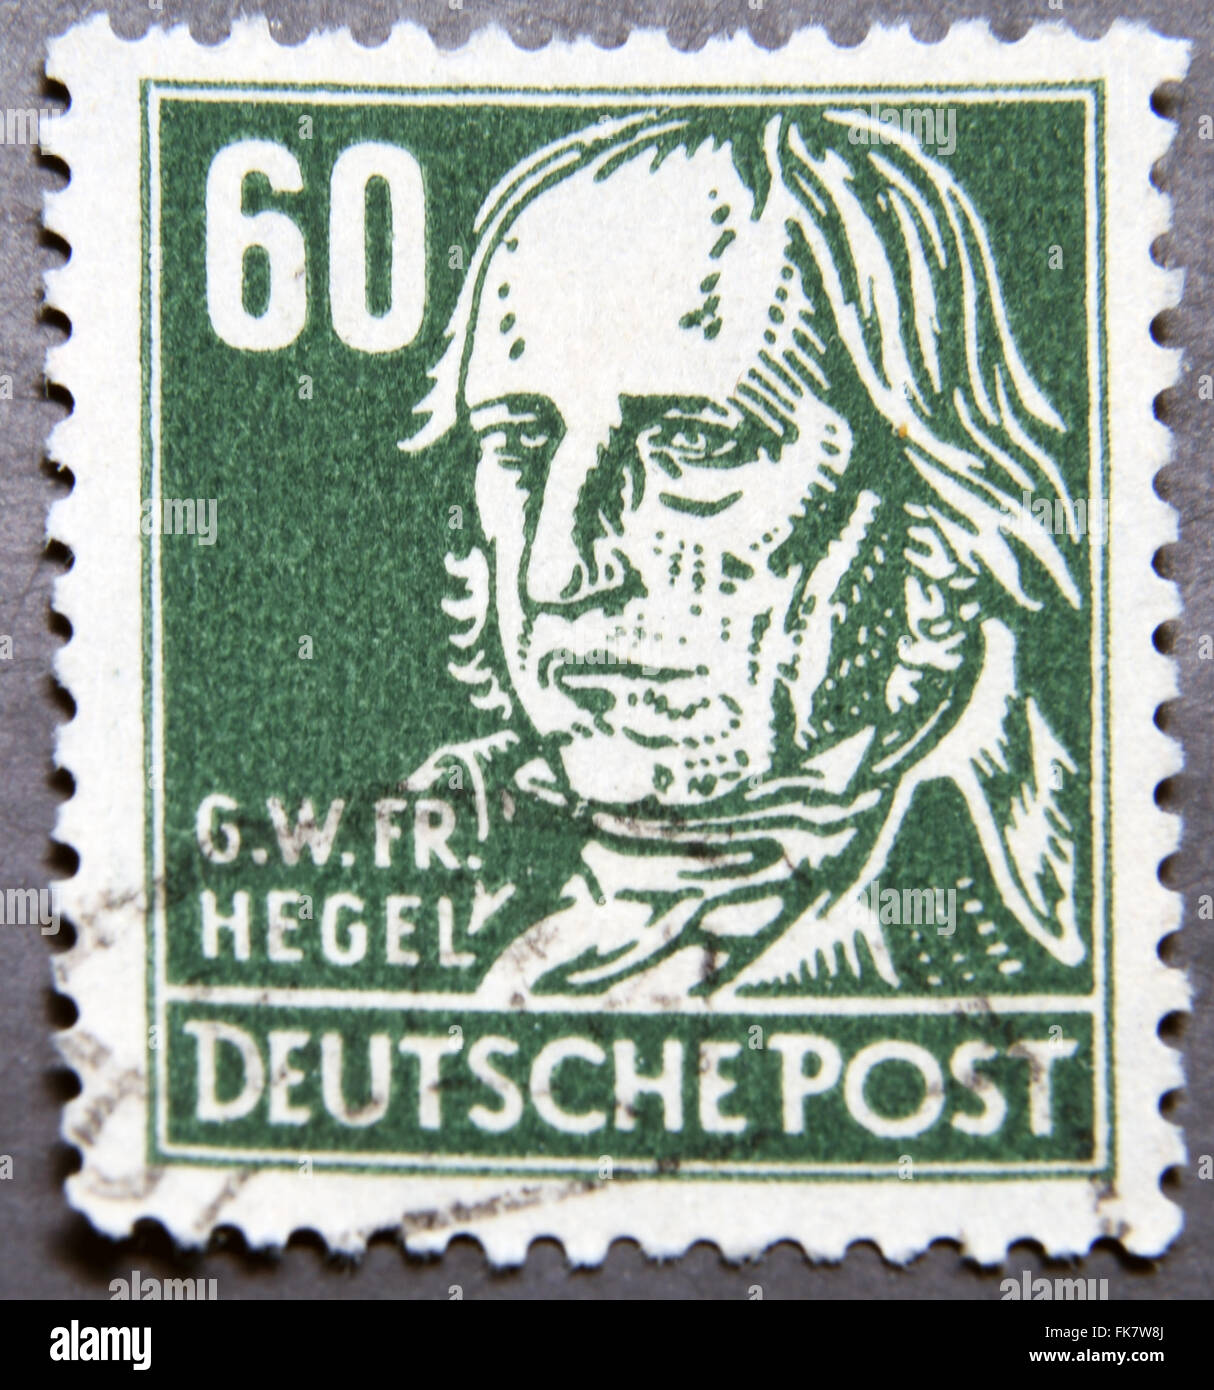 Allemagne - VERS 1952 : timbres en Allemagne montre portrait de Georg Wilhelm Friedrich Hegel, vers 1952 Banque D'Images